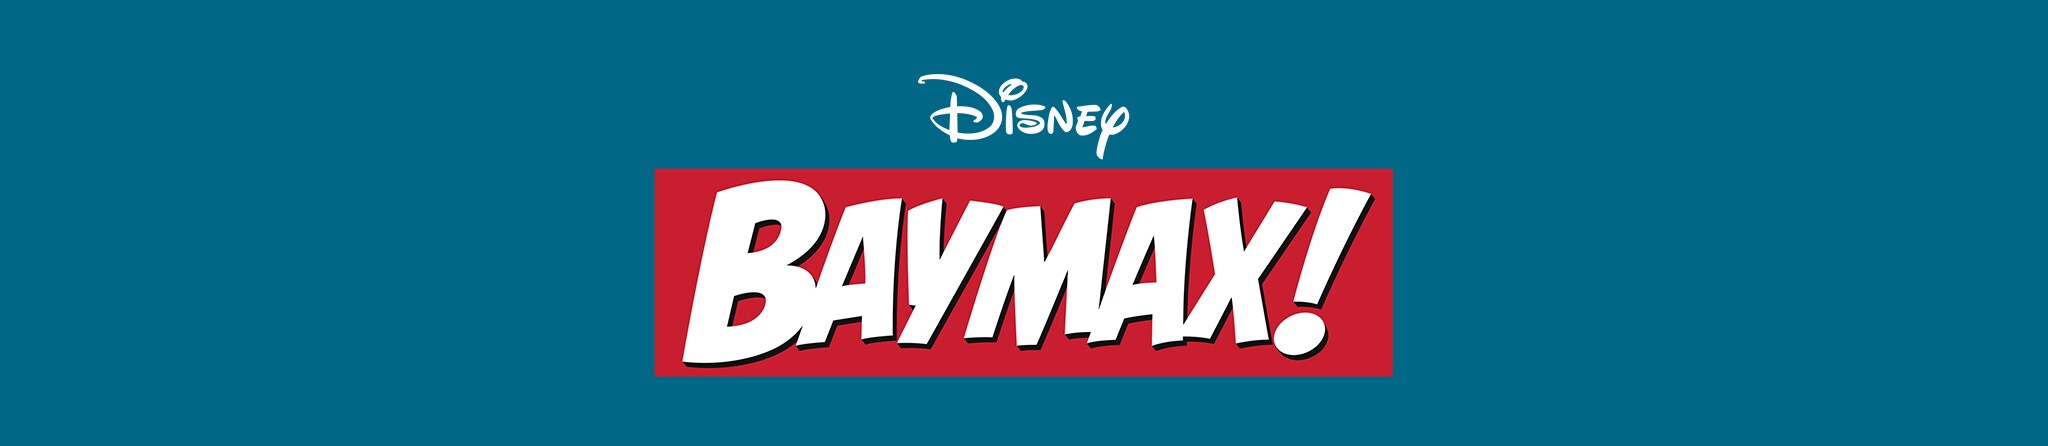 Disney | Baymax!